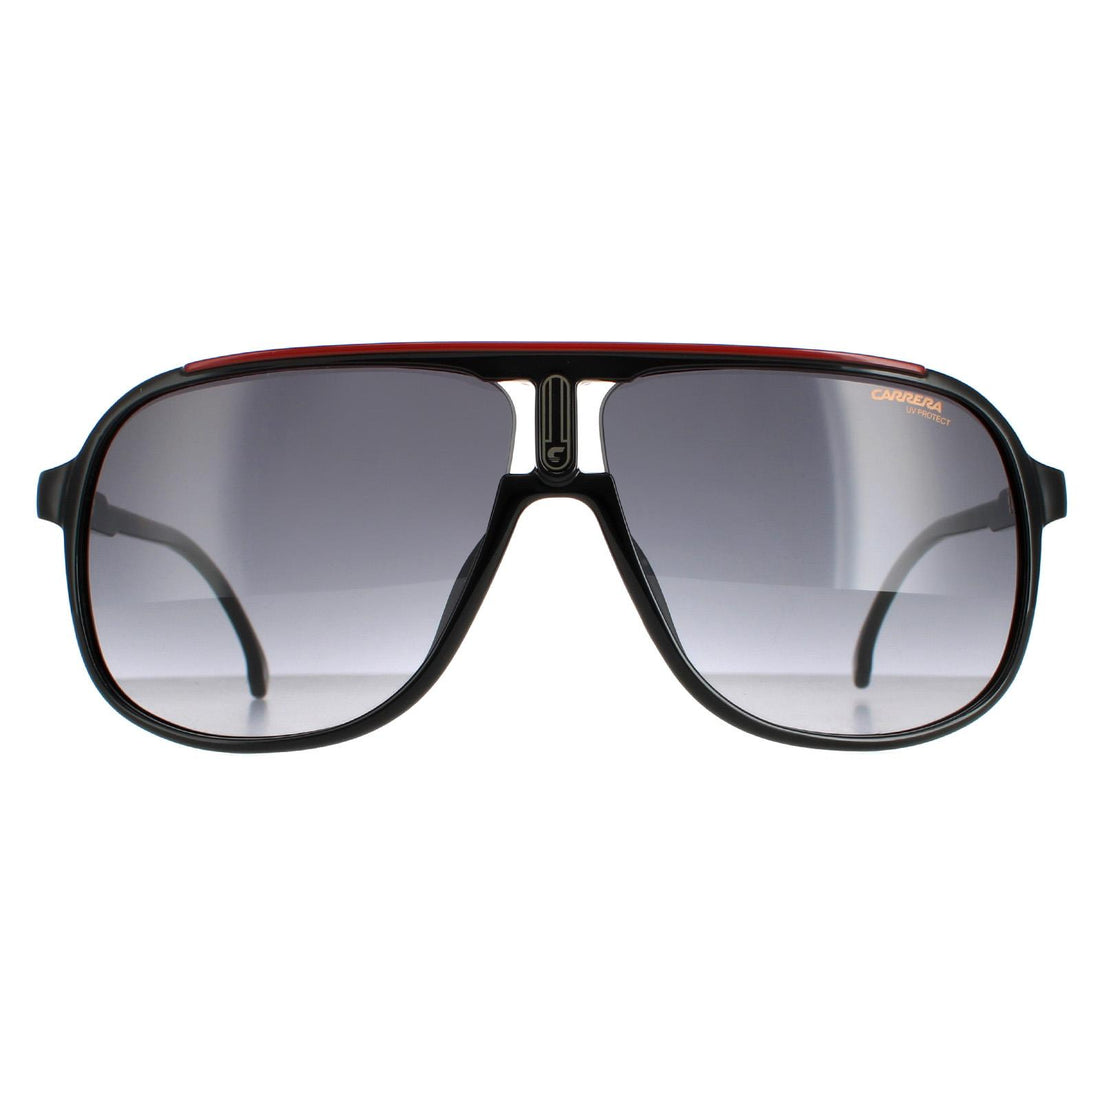 Carrera 1047/S Sunglasses Black Red / Dark Grey Gradient